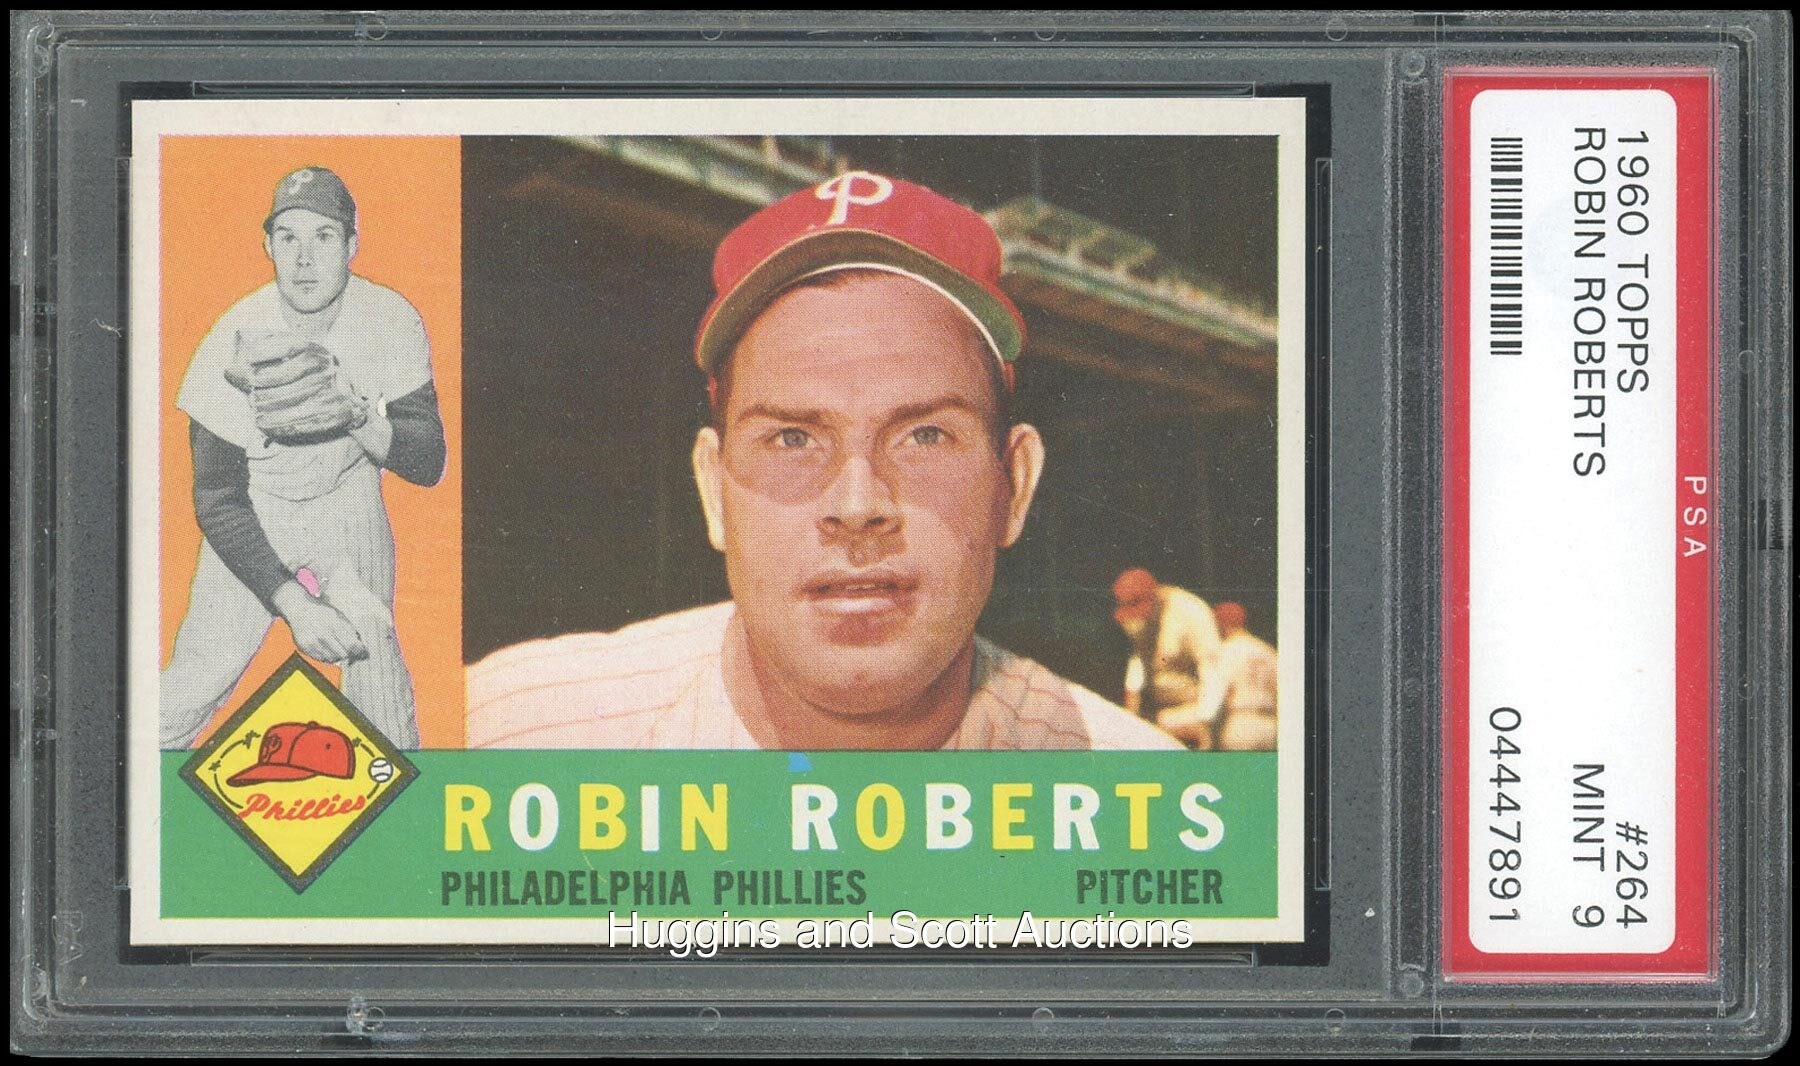 1960 Topps Baseball #264 Robin Roberts PSA Mint 9 - None Better!